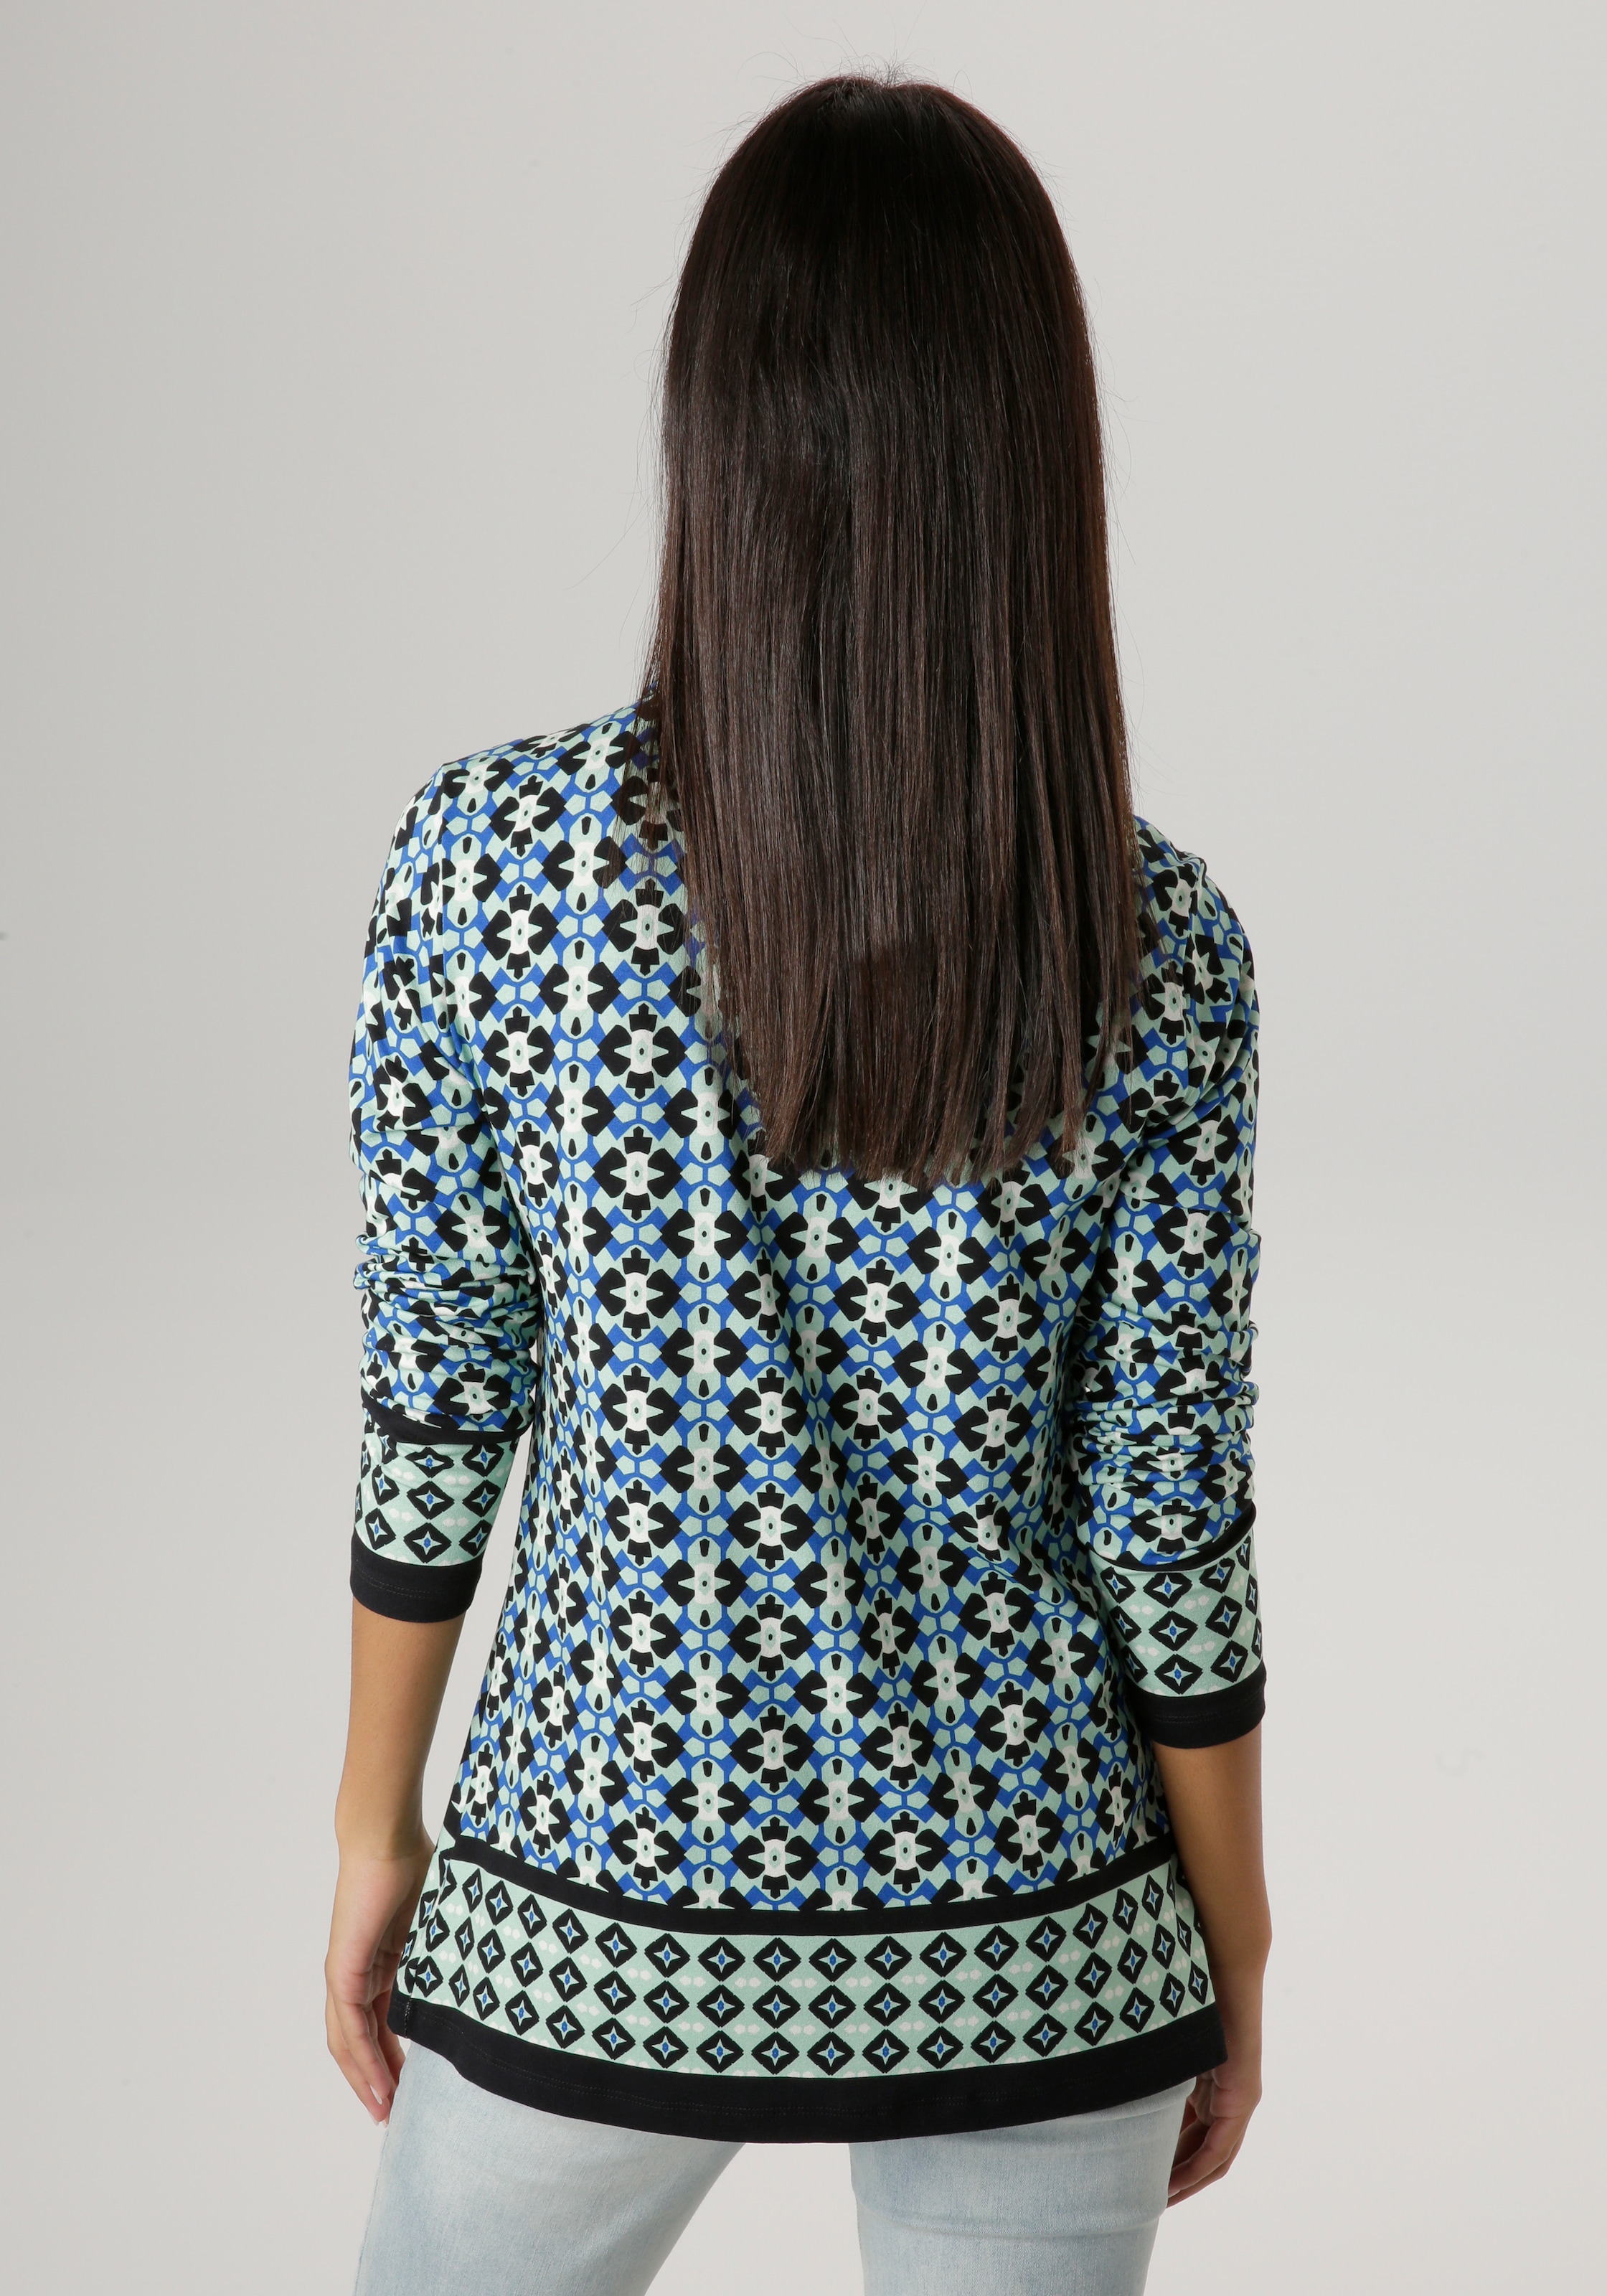 SELECTED ♕ in KOLLEKTION - versandkostenfrei Aniston kaufen Hemdbluse, NEUE Jerseyqualität elastischer